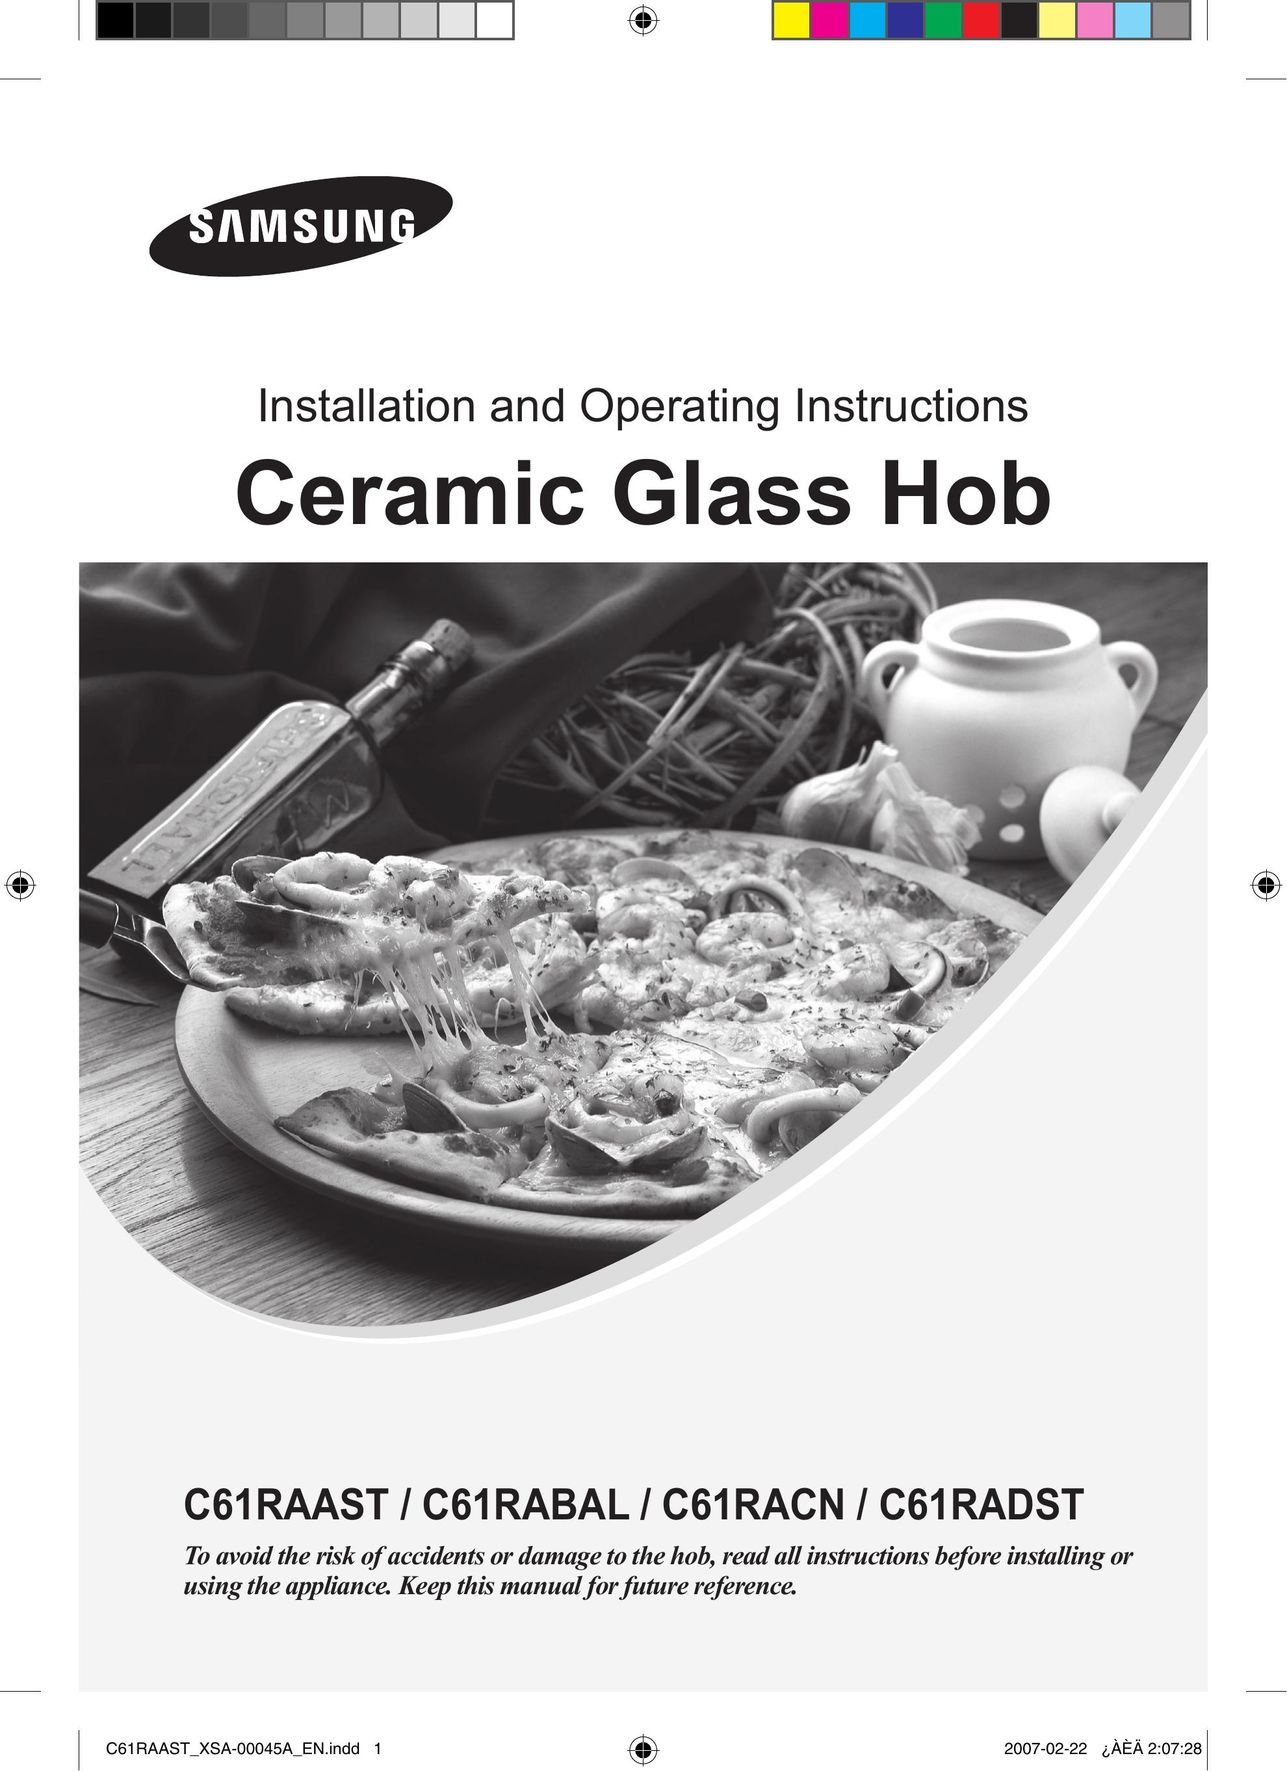 Samsung C61RADST Cooktop User Manual